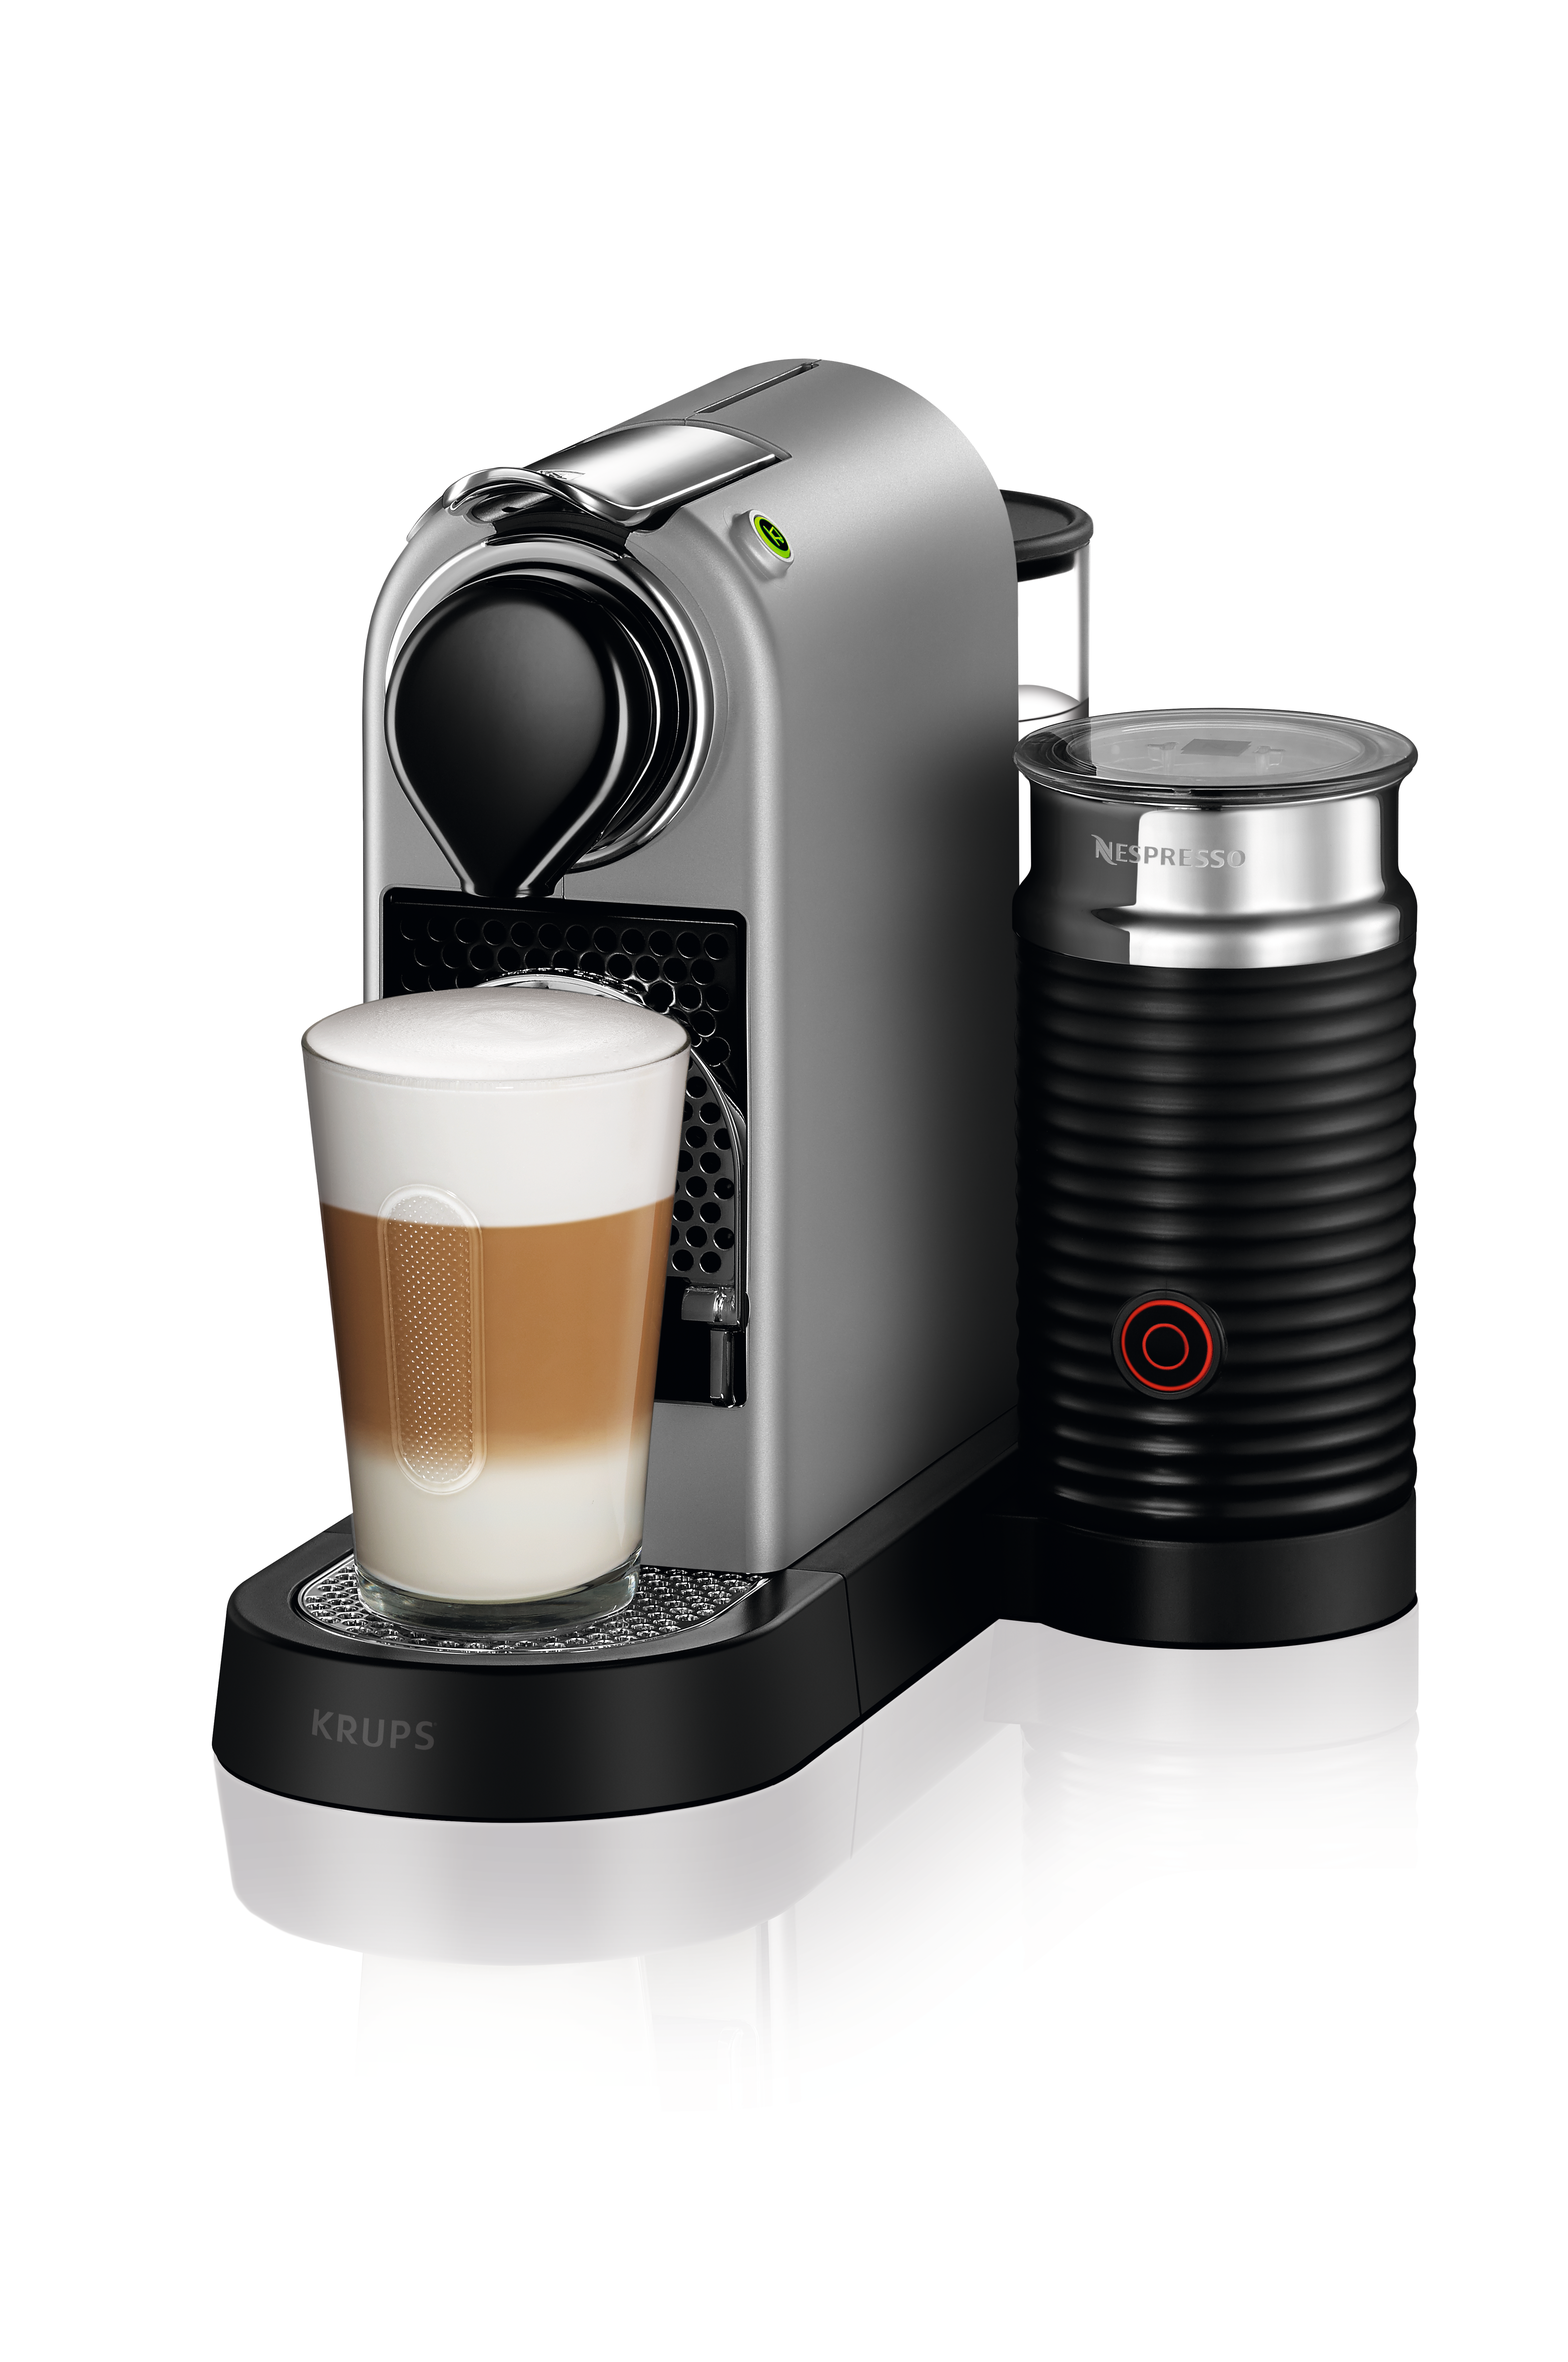 Krups Nespresso espressomachine - Silver XN761B zilver espressomachine kopen? | Kieskeurig.nl | helpt je